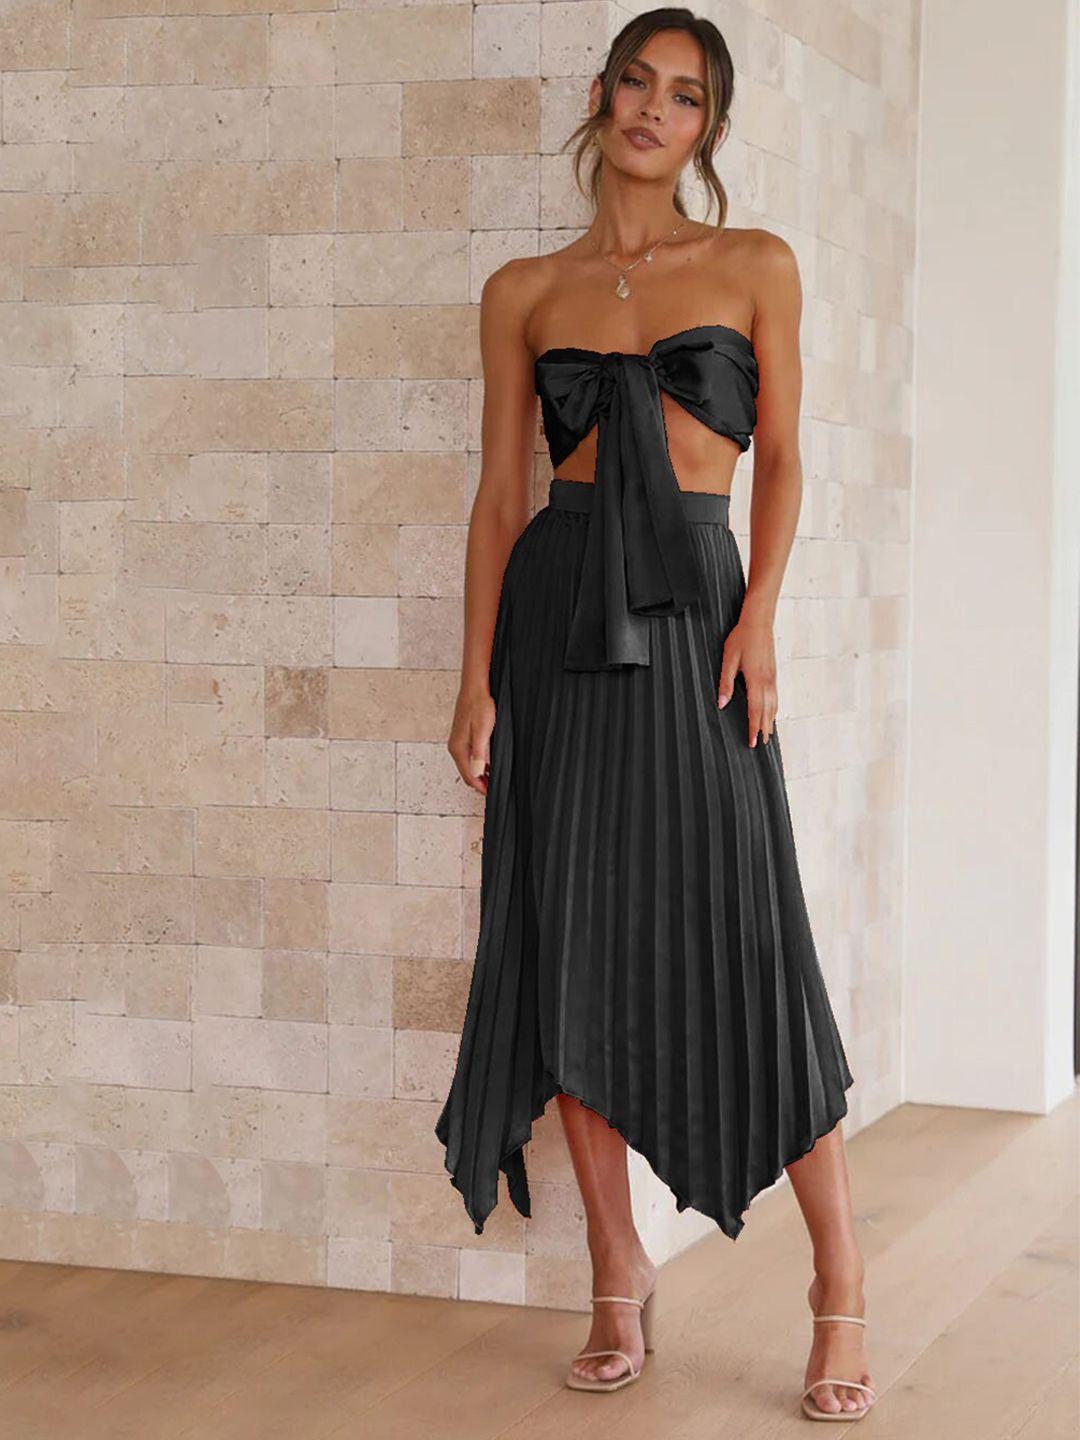 bostreet black strapless top & accordion pleated skirt